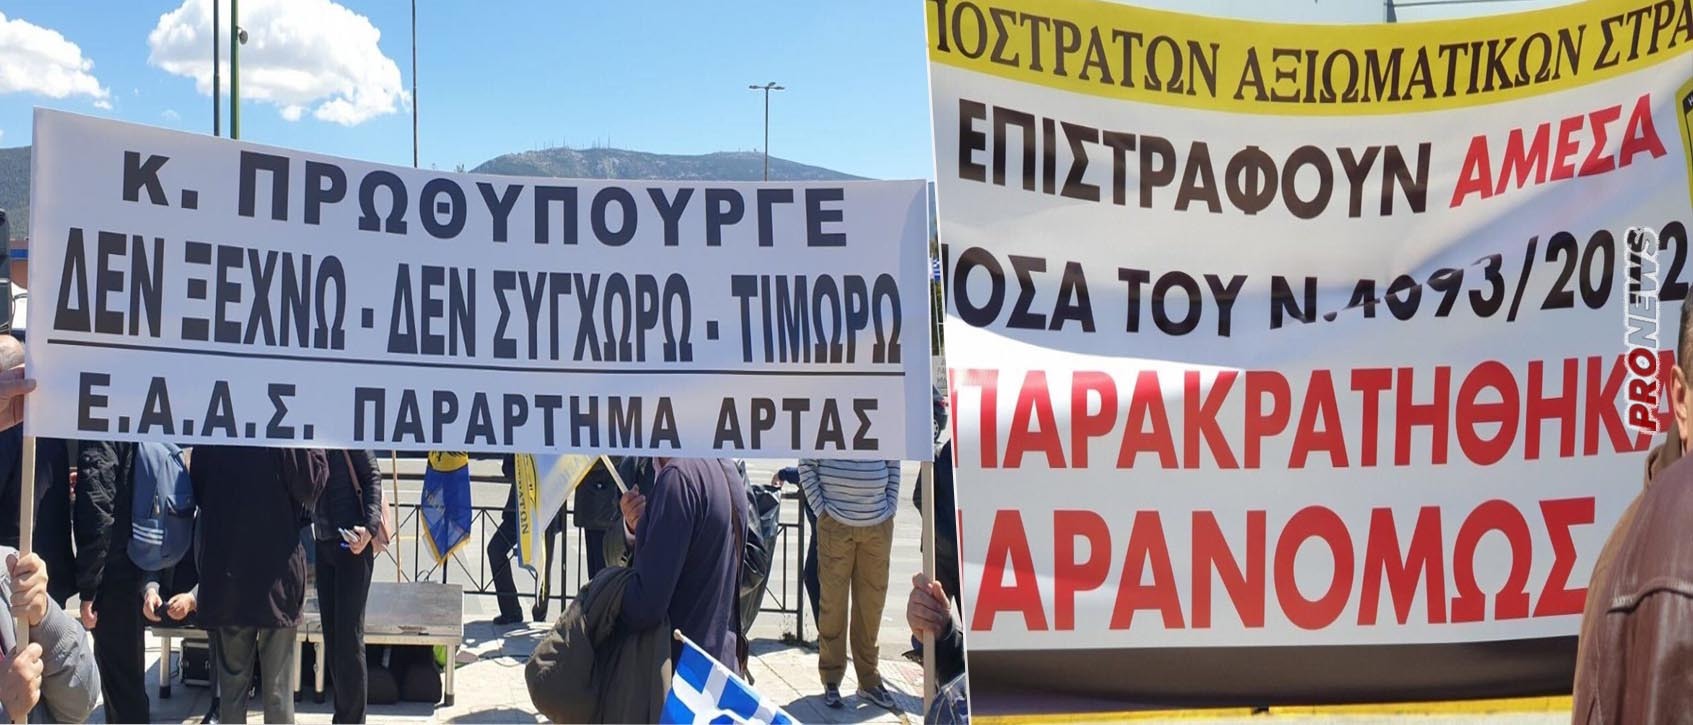 Oι Έλληνες αξιωματικοί του Στρατού Ξηράς πένονται και απαξιώνονται γιατί απλά αγάπησαν την πατρίδα – Μεγάλη συγκέντρωση διαμαρτυρίας στο ΥΠΕΘΑ